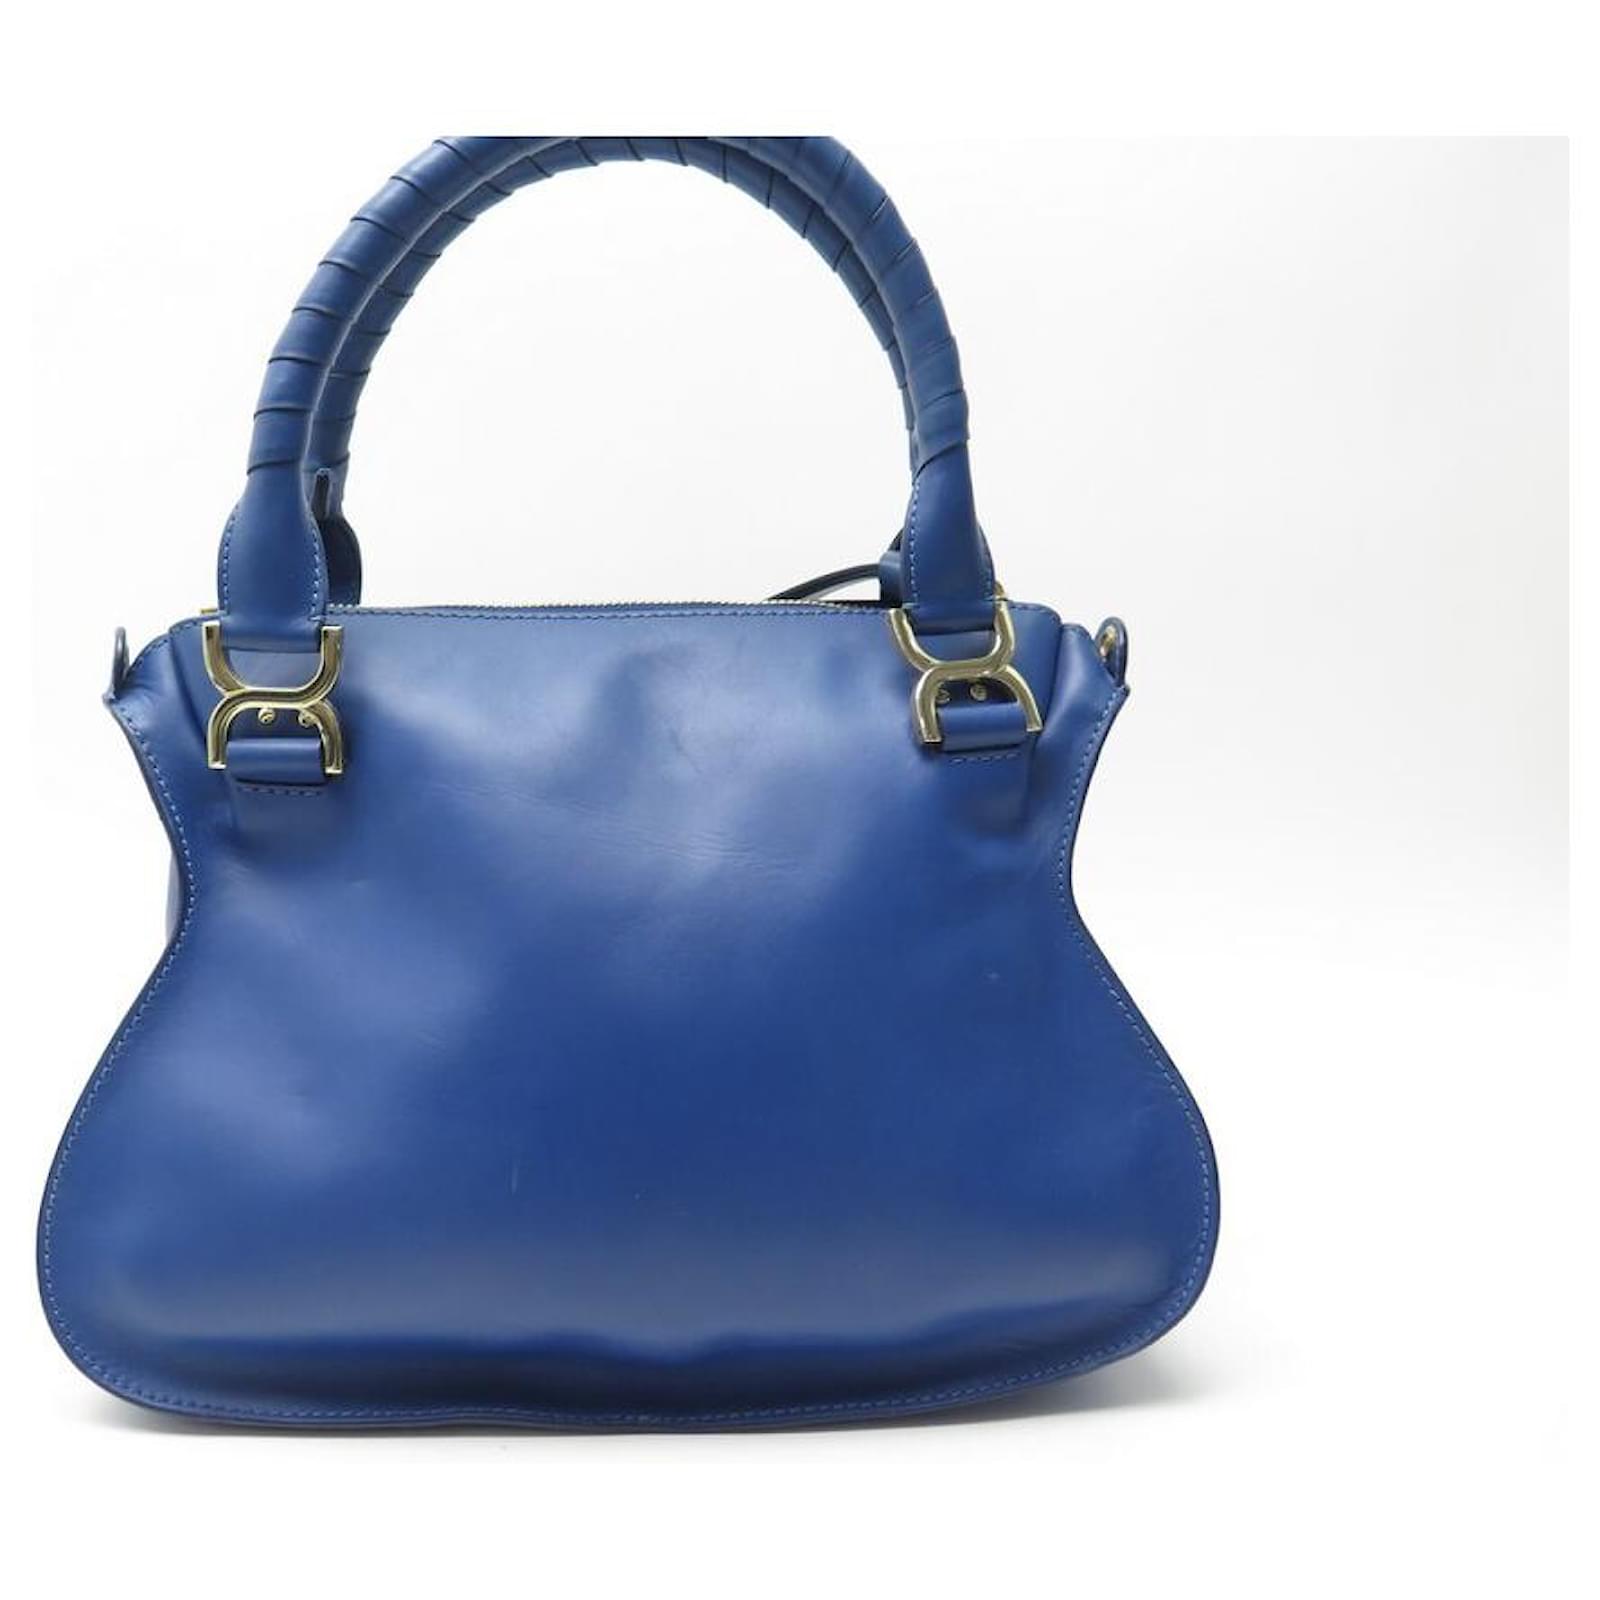 Chloé CHLOE MARCIE MEDIUM SMOOTH BLUE LEATHER BANDOULIERE HAND BAG